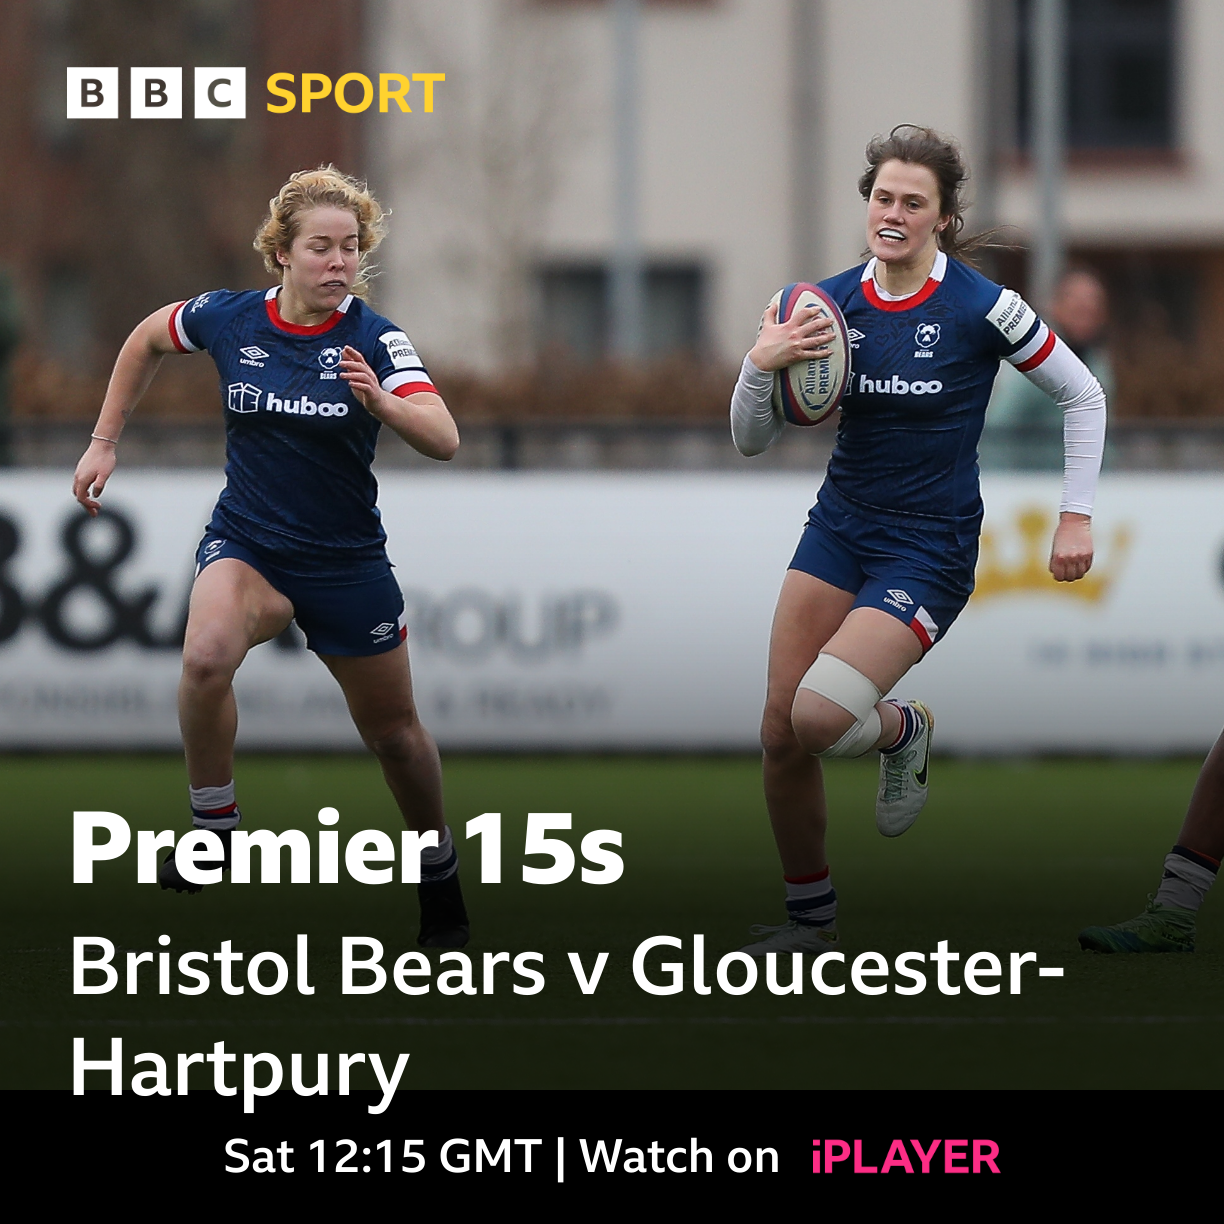 Premier 15s Watch Bristol Bears v Gloucester-Hartpury - Live